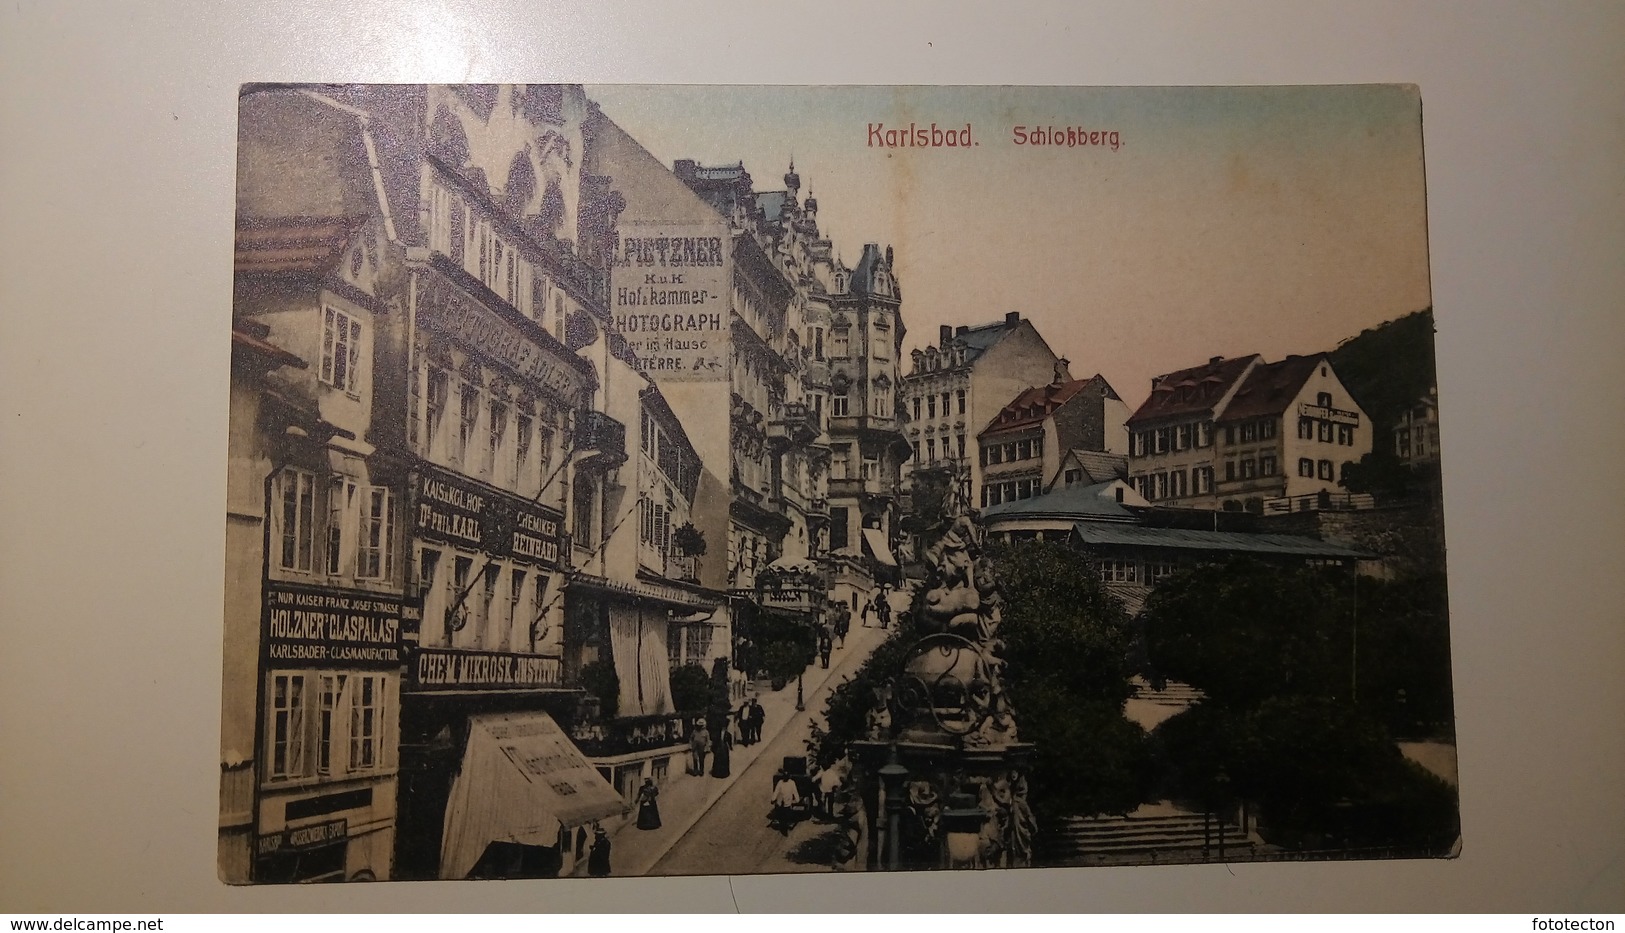 Česká Republika - Karlsbad Schloßberg - Deutschland? 1900-1920? - Repubblica Ceca